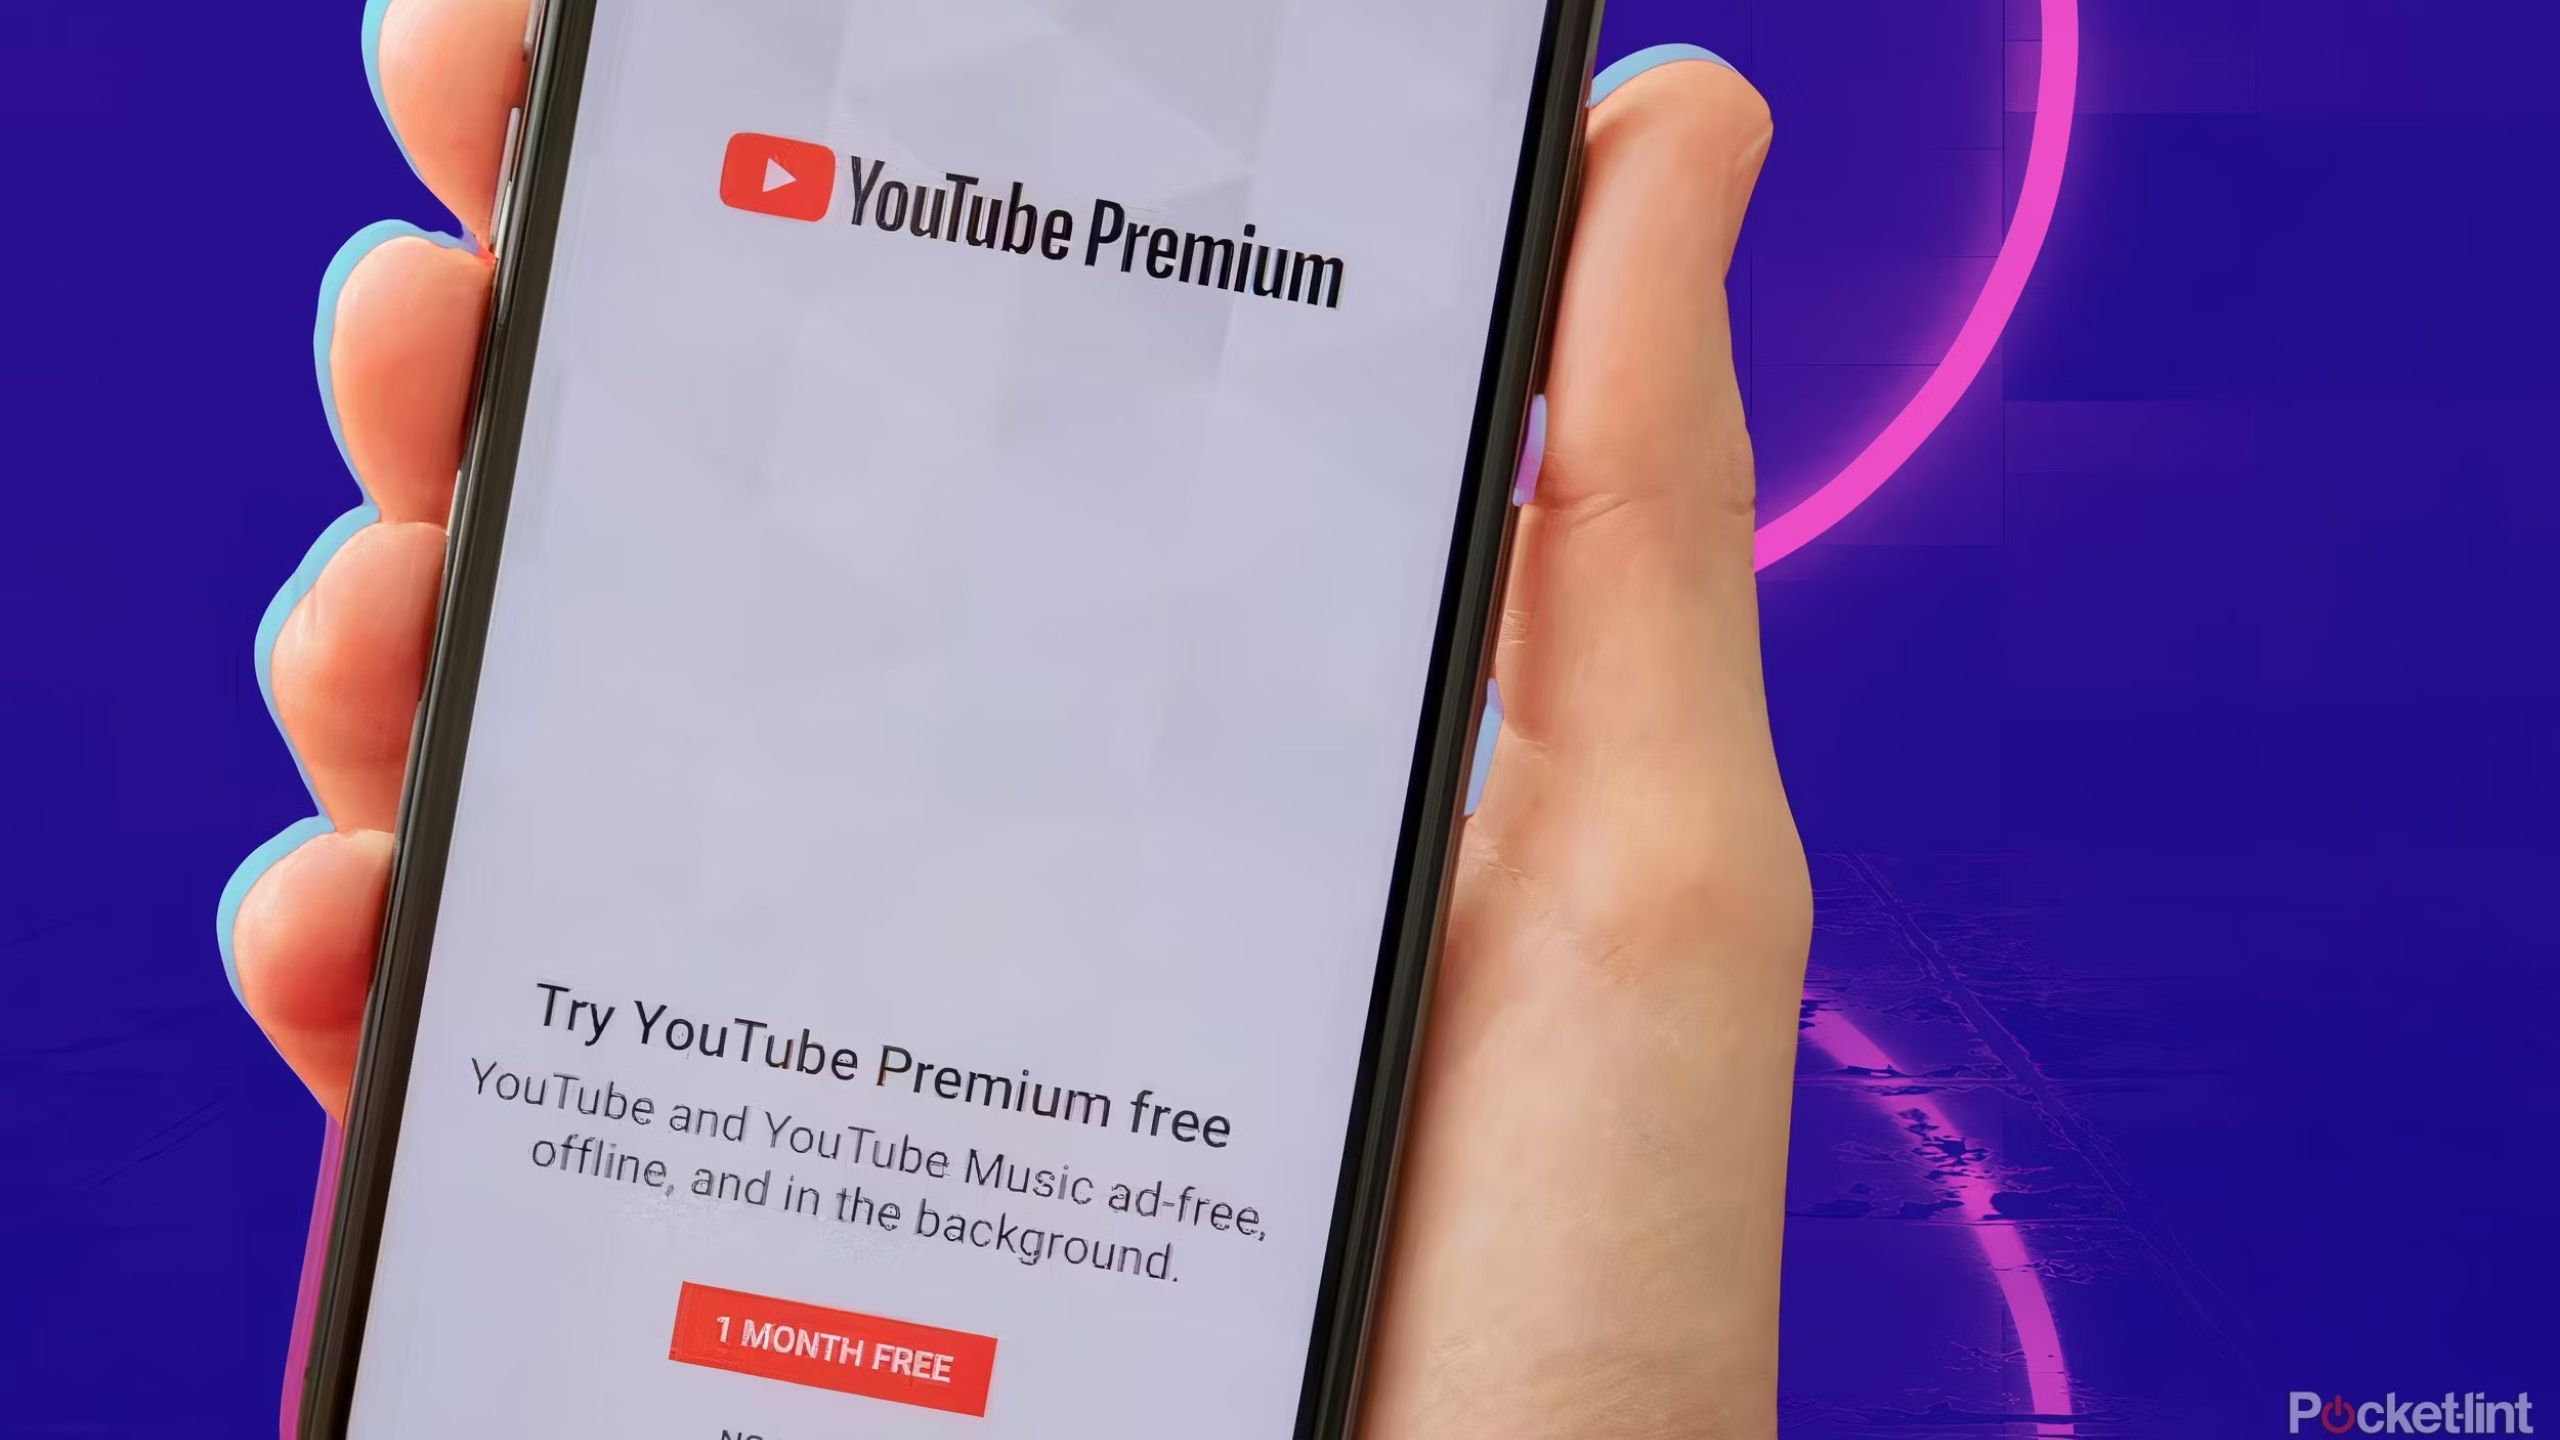 New YouTube Premium features announced